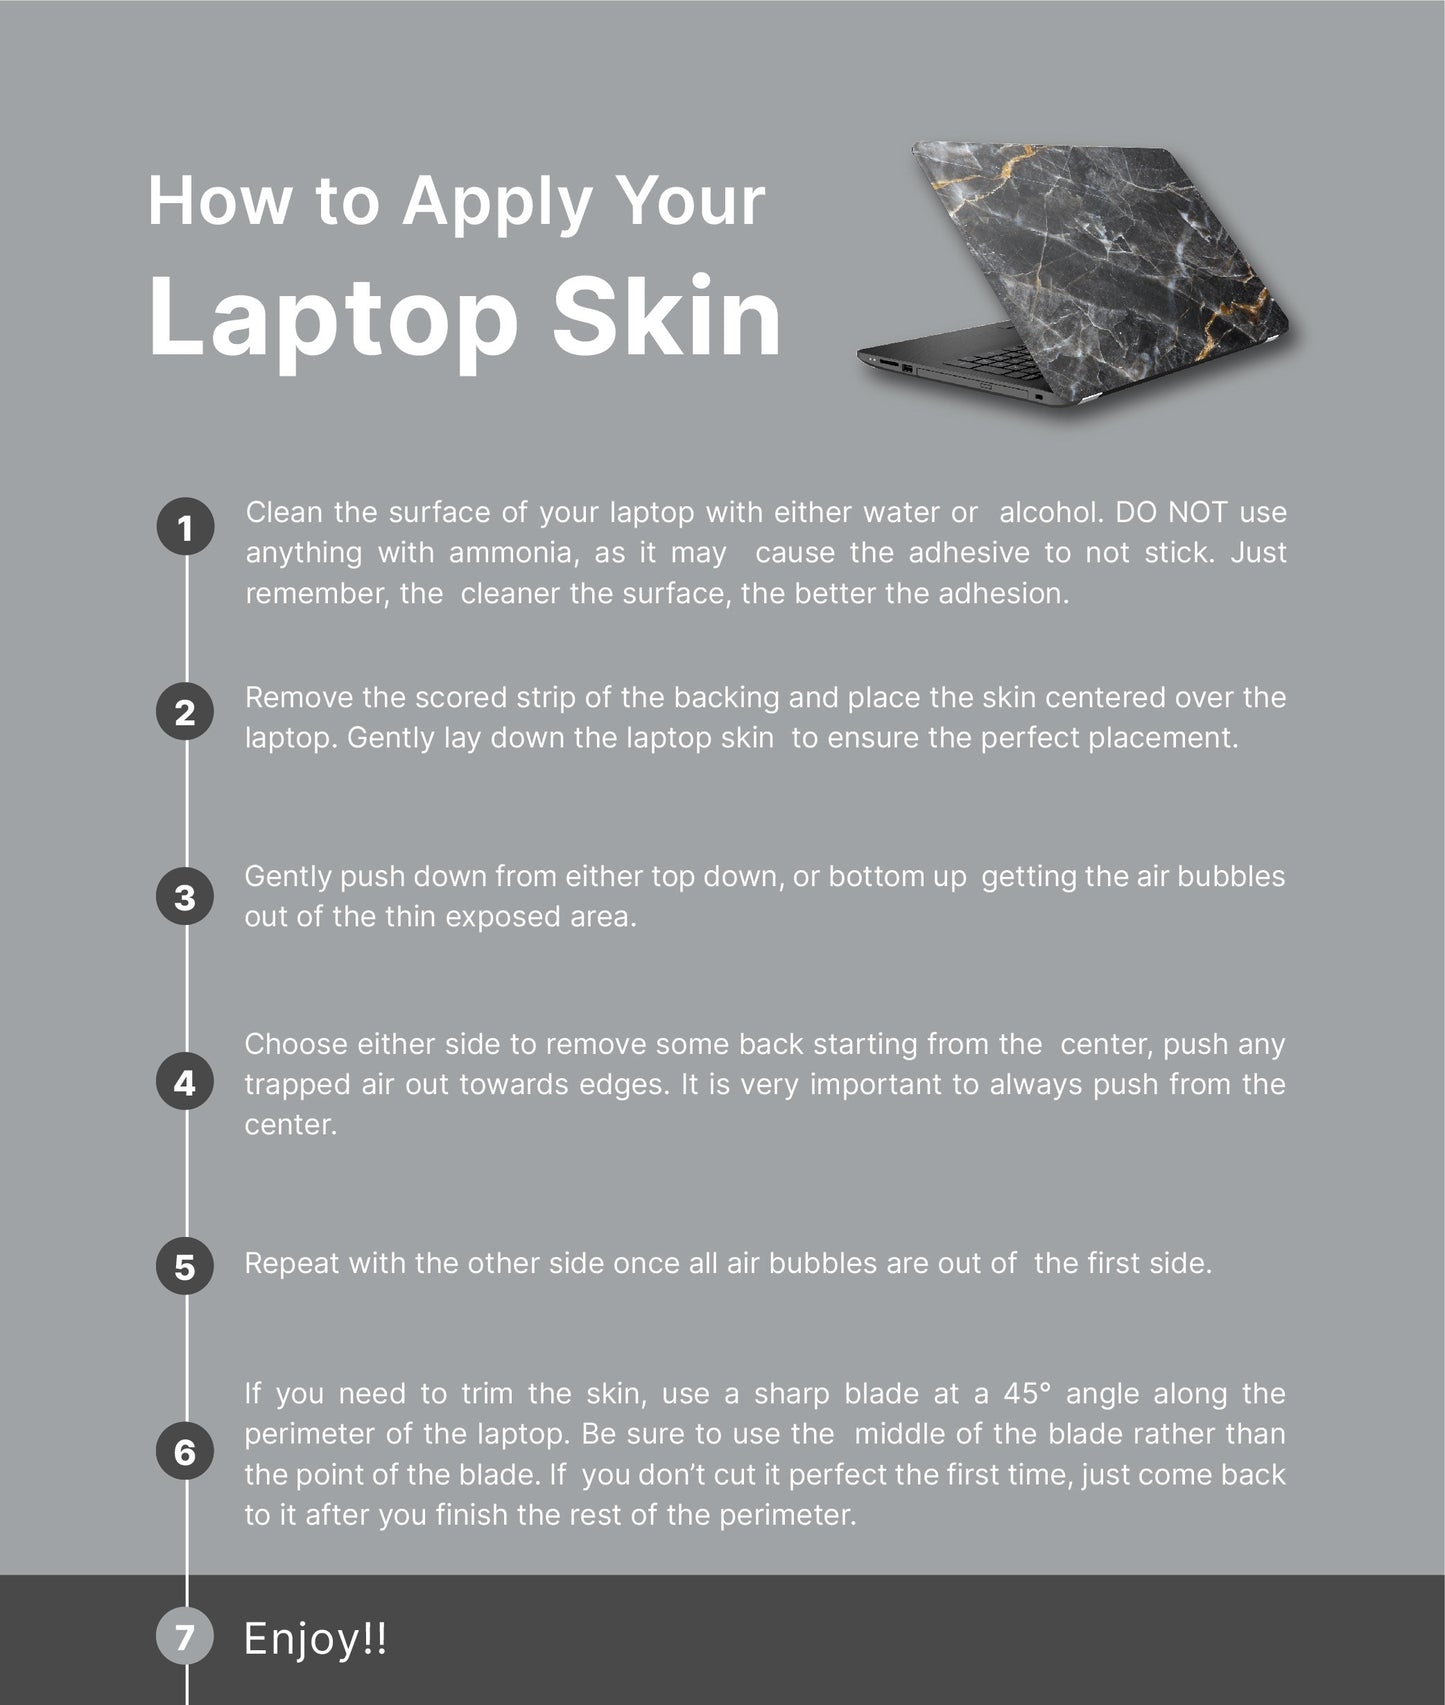 Tropical Floral Laptop Skin, Laptop Cover, Laptop Skins, Removable Laptop Skins, Laptop Decal, Customized Laptop Skin, Laptop Stickers 153